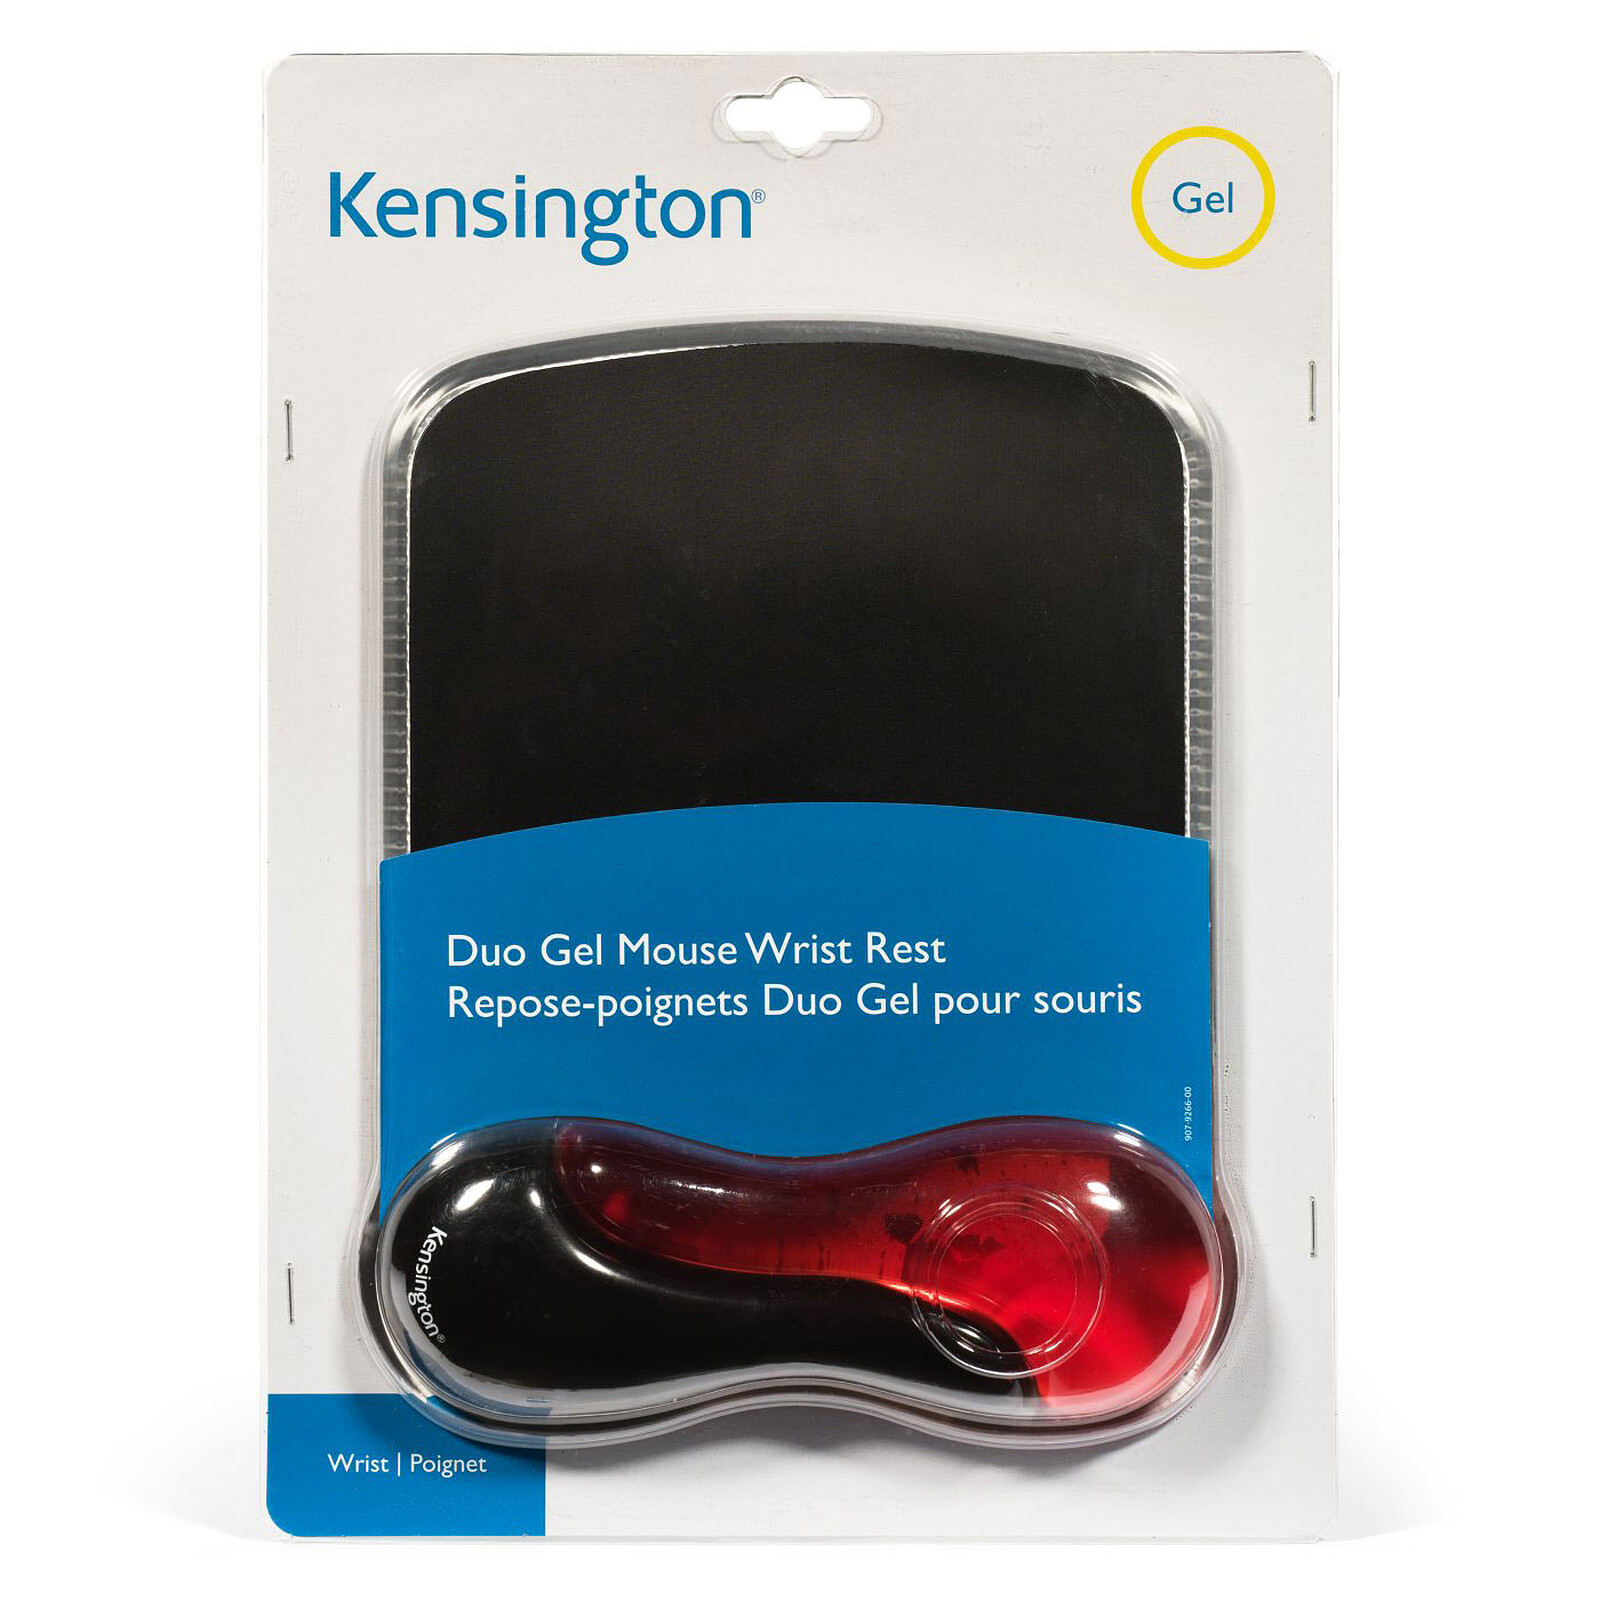 Kensington repose-poignets Duo Gel (coloris noir/bleu) - Repose poignets -  Garantie 3 ans LDLC